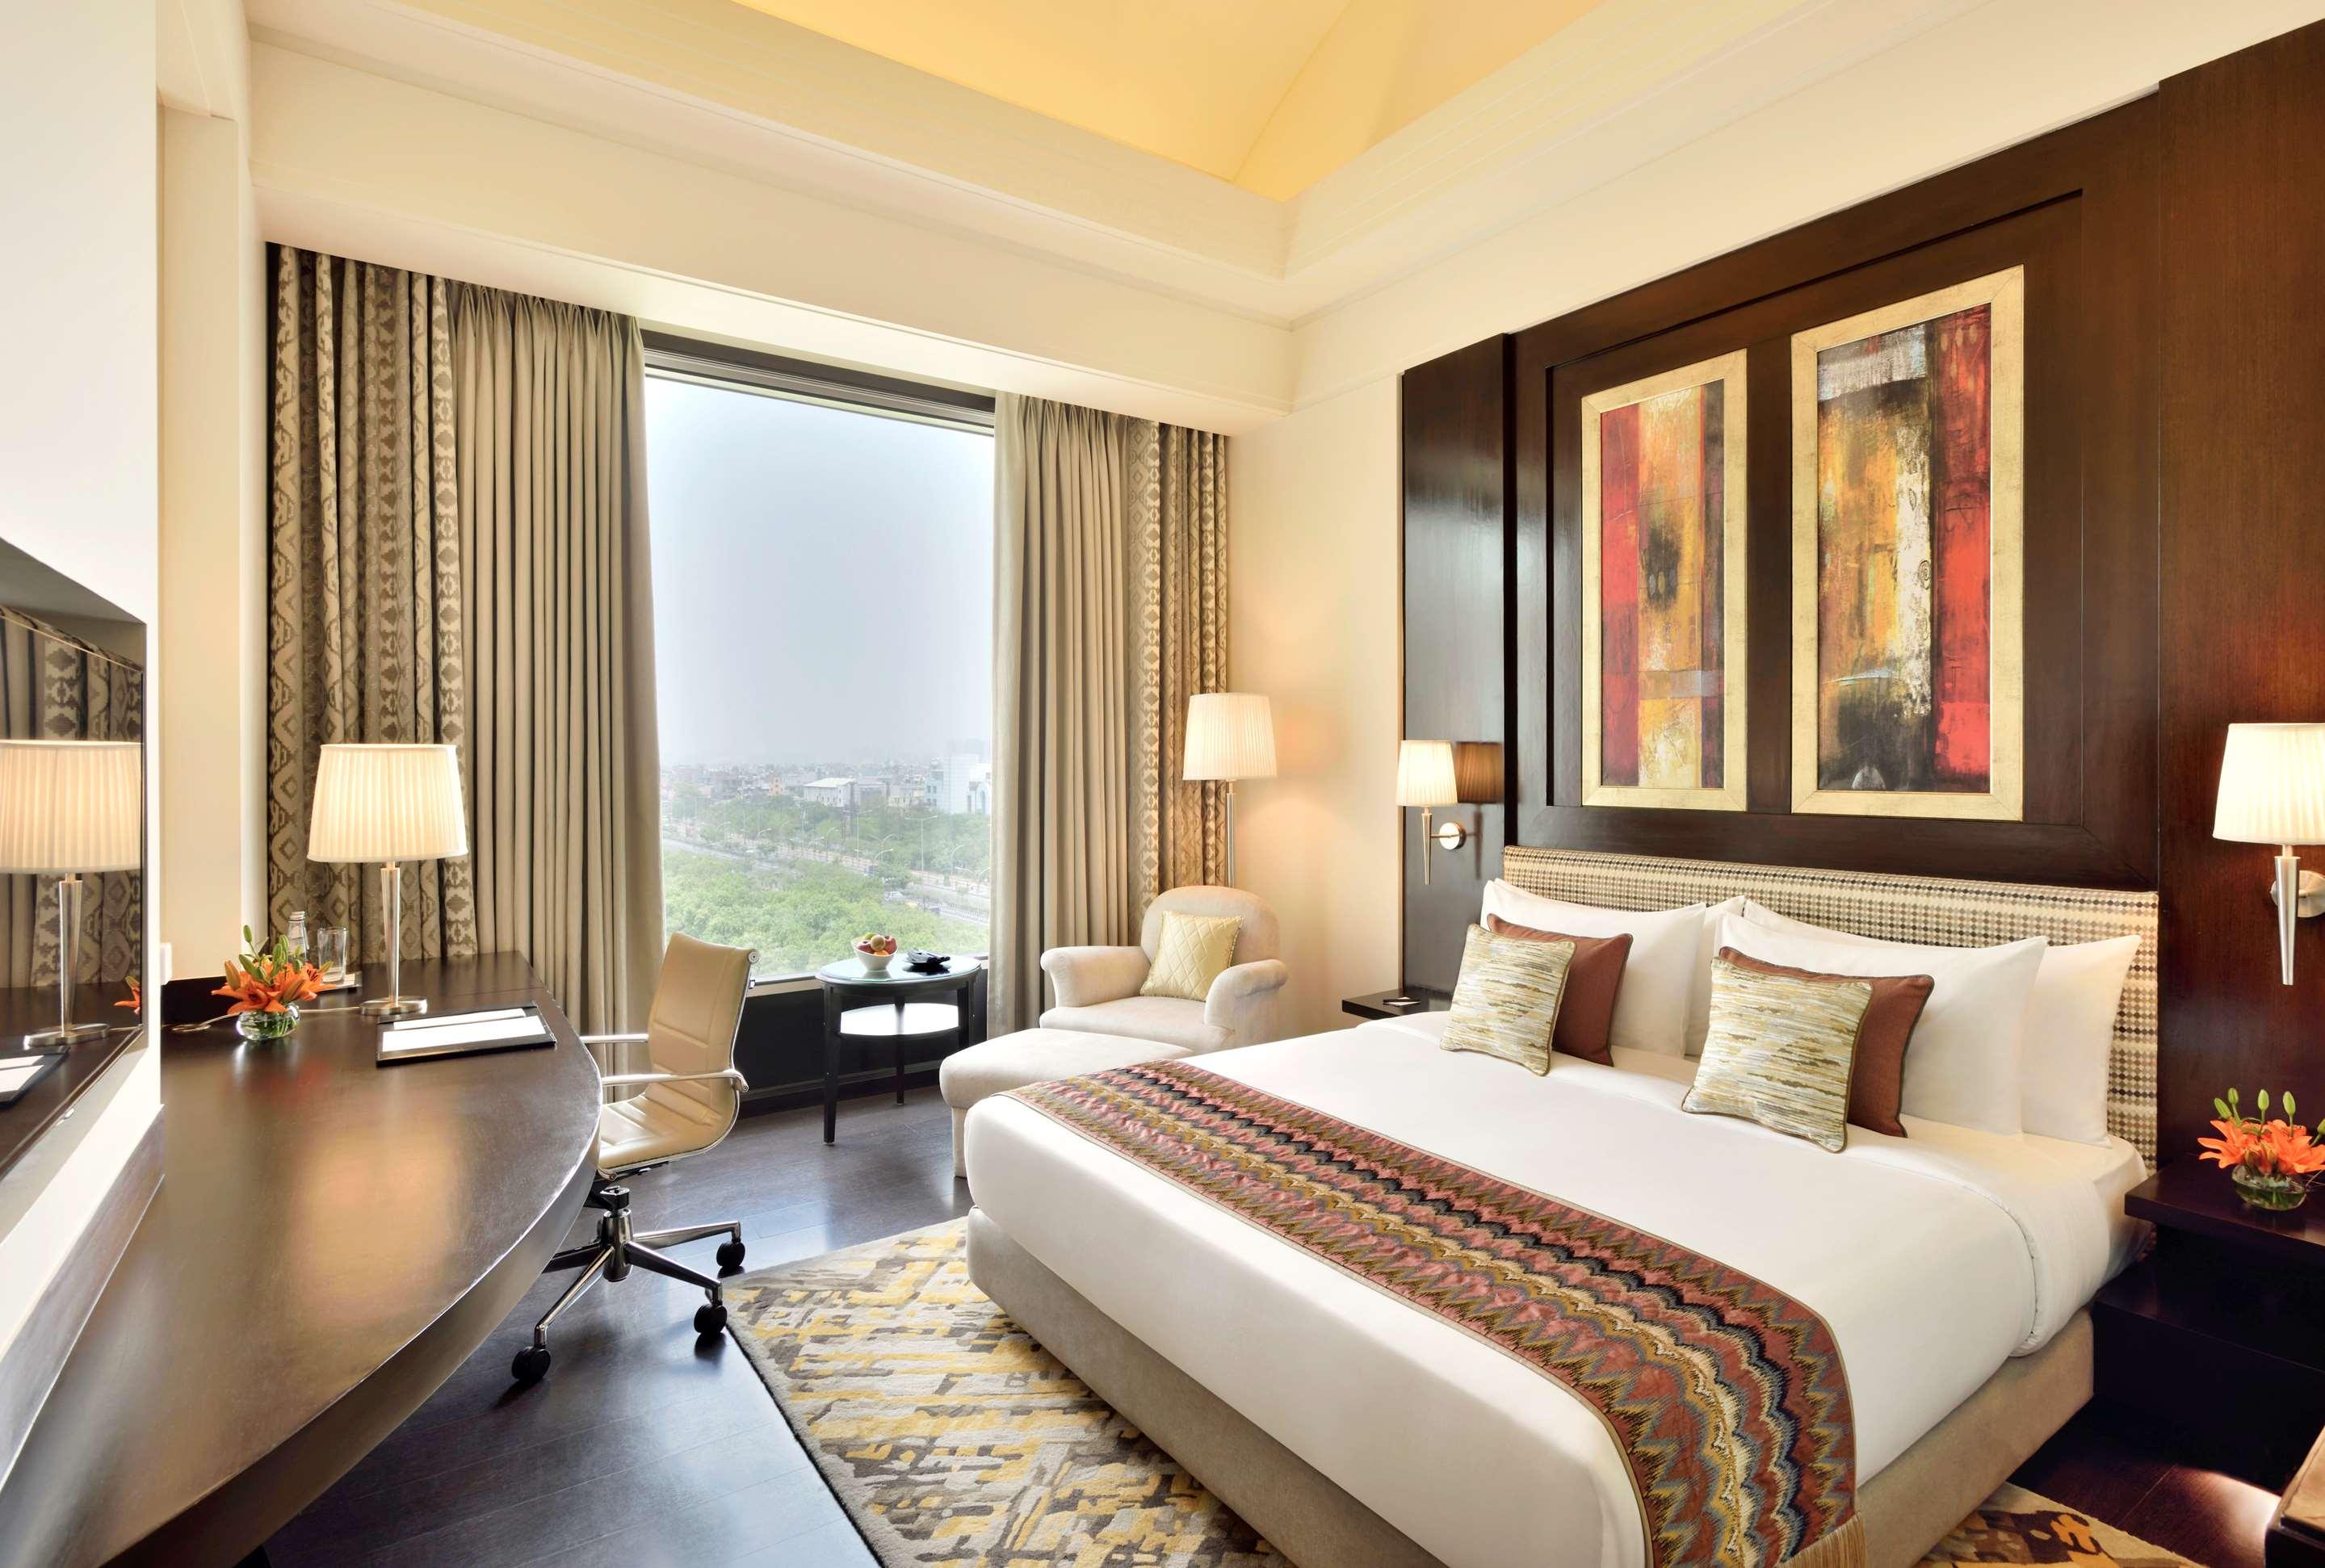 20 Best Hotels in Noida. Hotels from $7/night - KAYAK